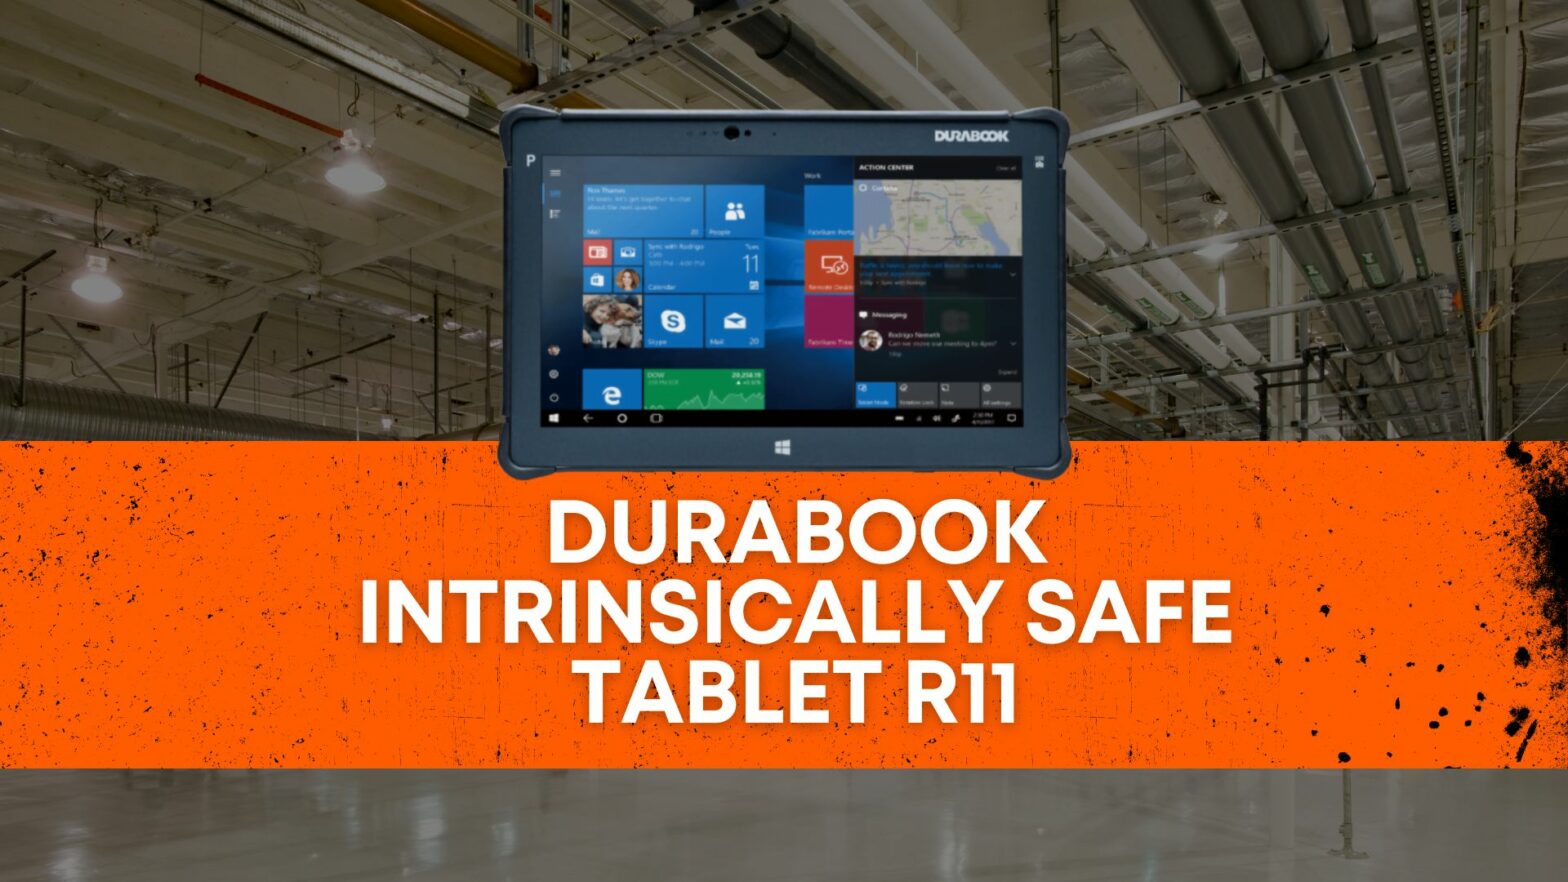 Durabook Intrinsically Safe Tablet R11